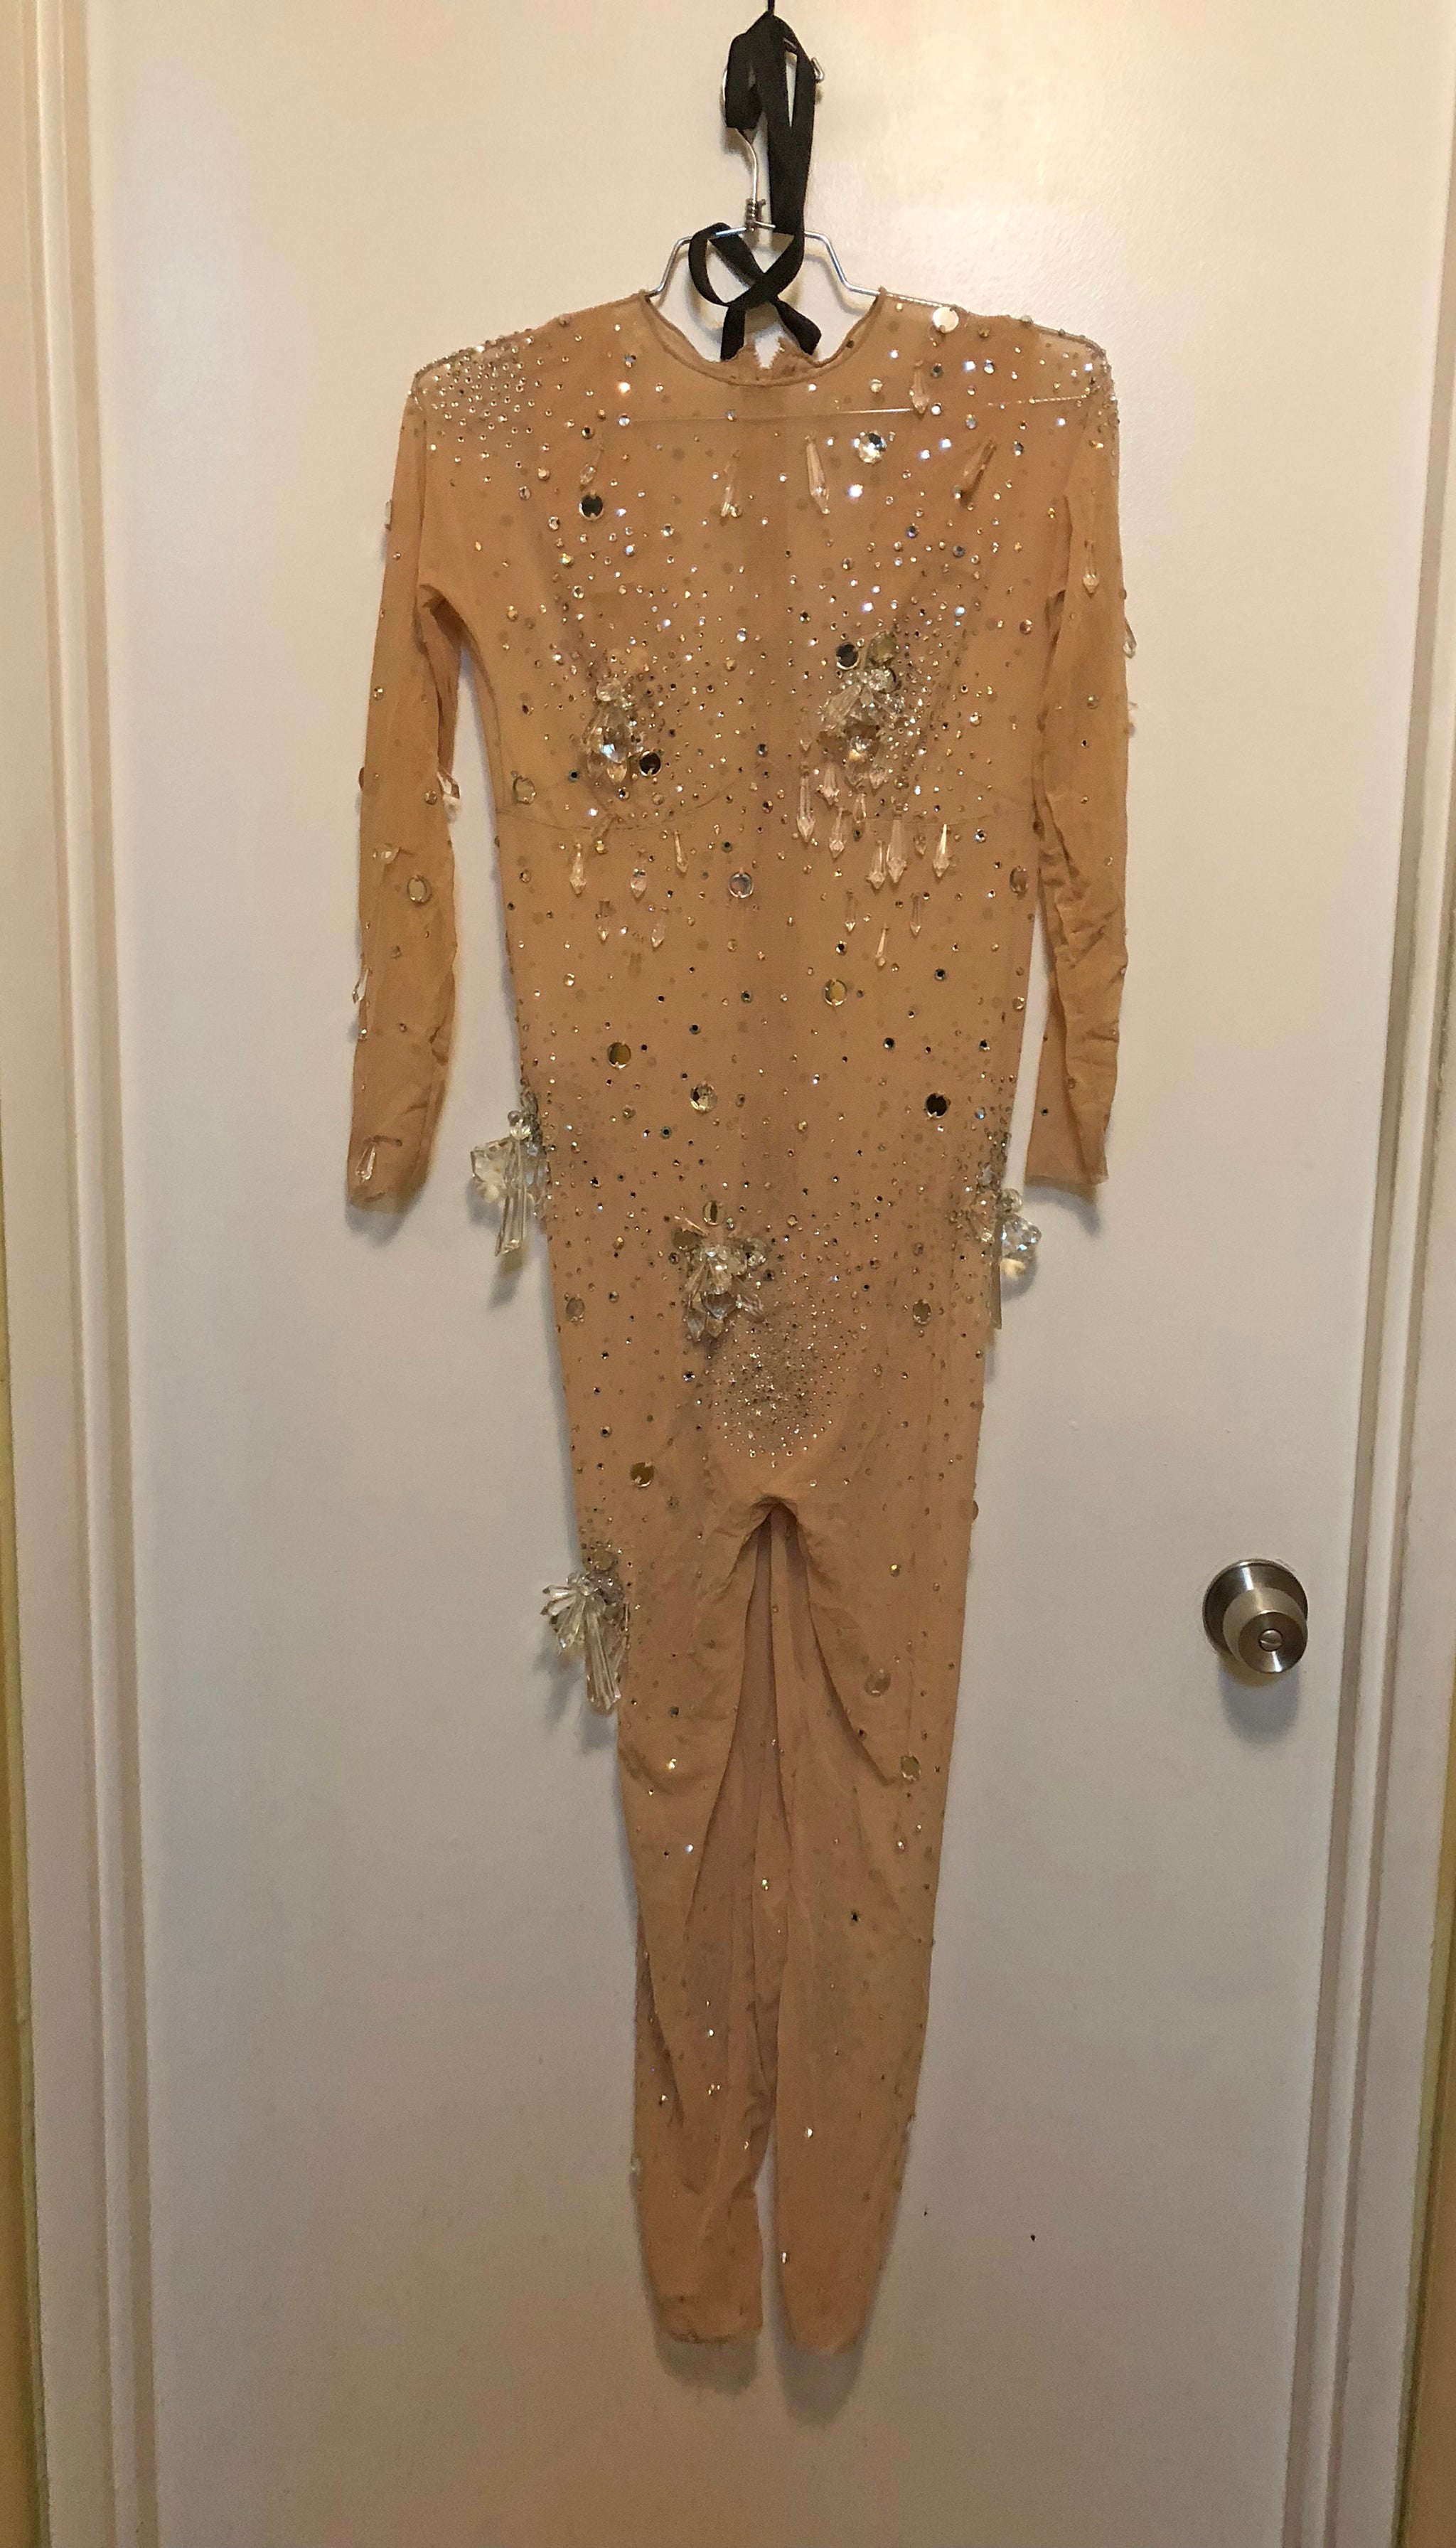 TABOO Original Broadway Nude Bejeweled Body Suit Worn by SARA